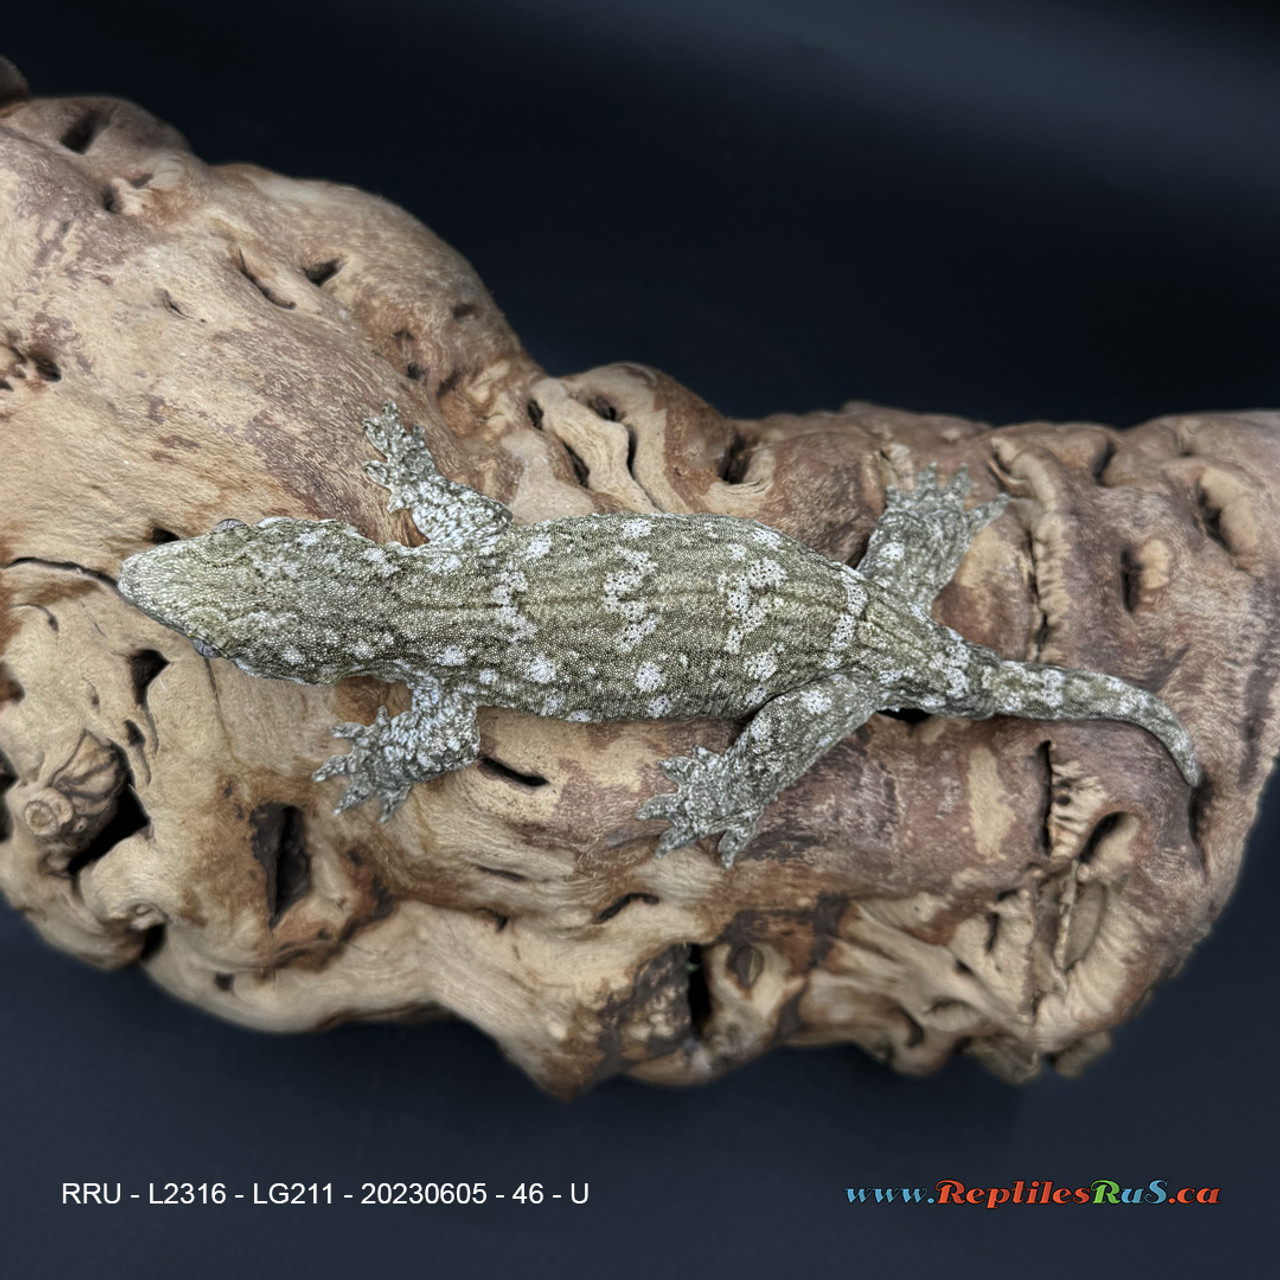 Leachianus Gecko (46g Unsexed) - LG211